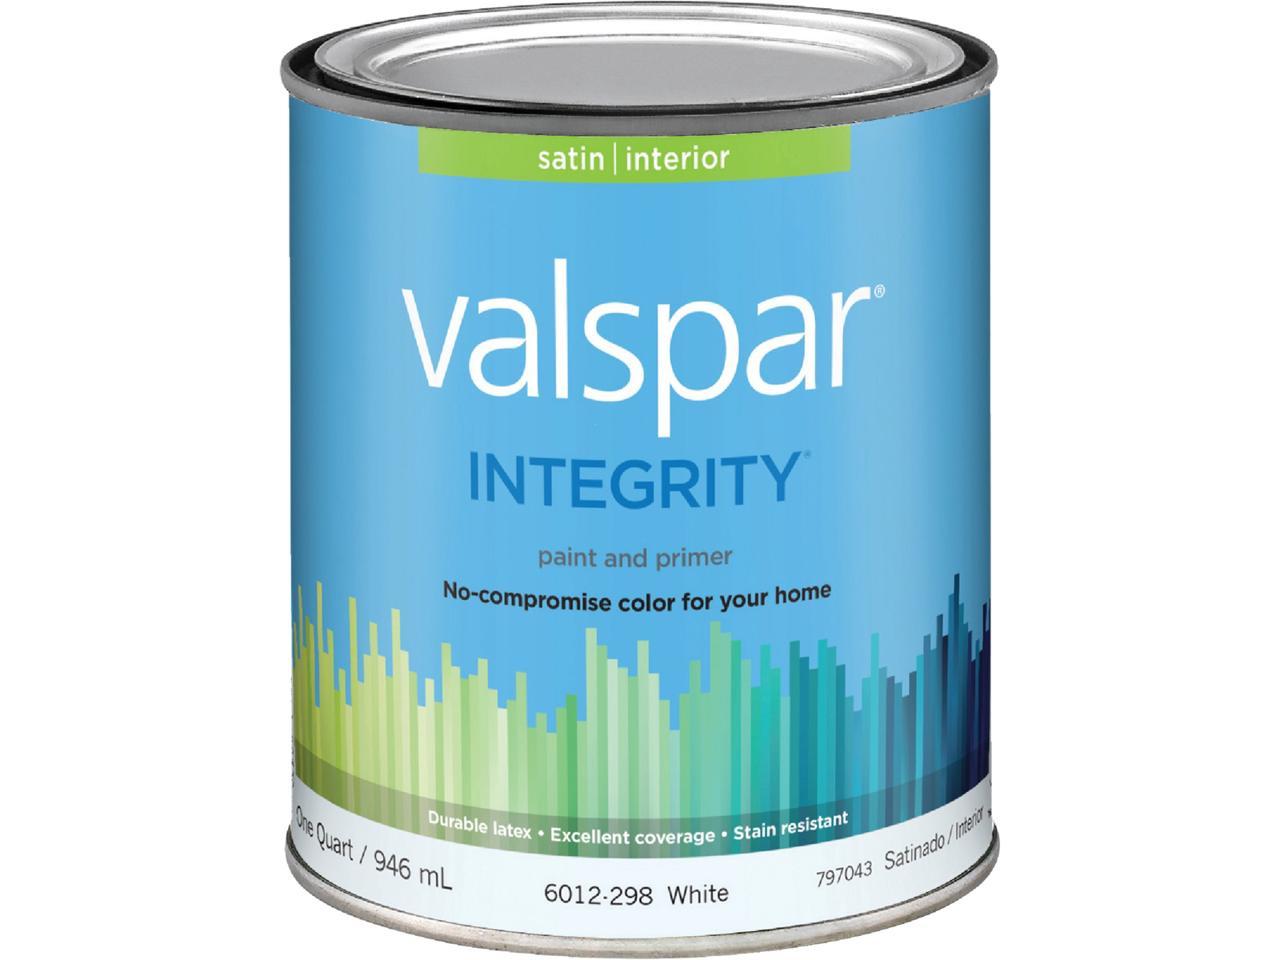 Valspar Integrity Latex Paint And Primer Satin Interior